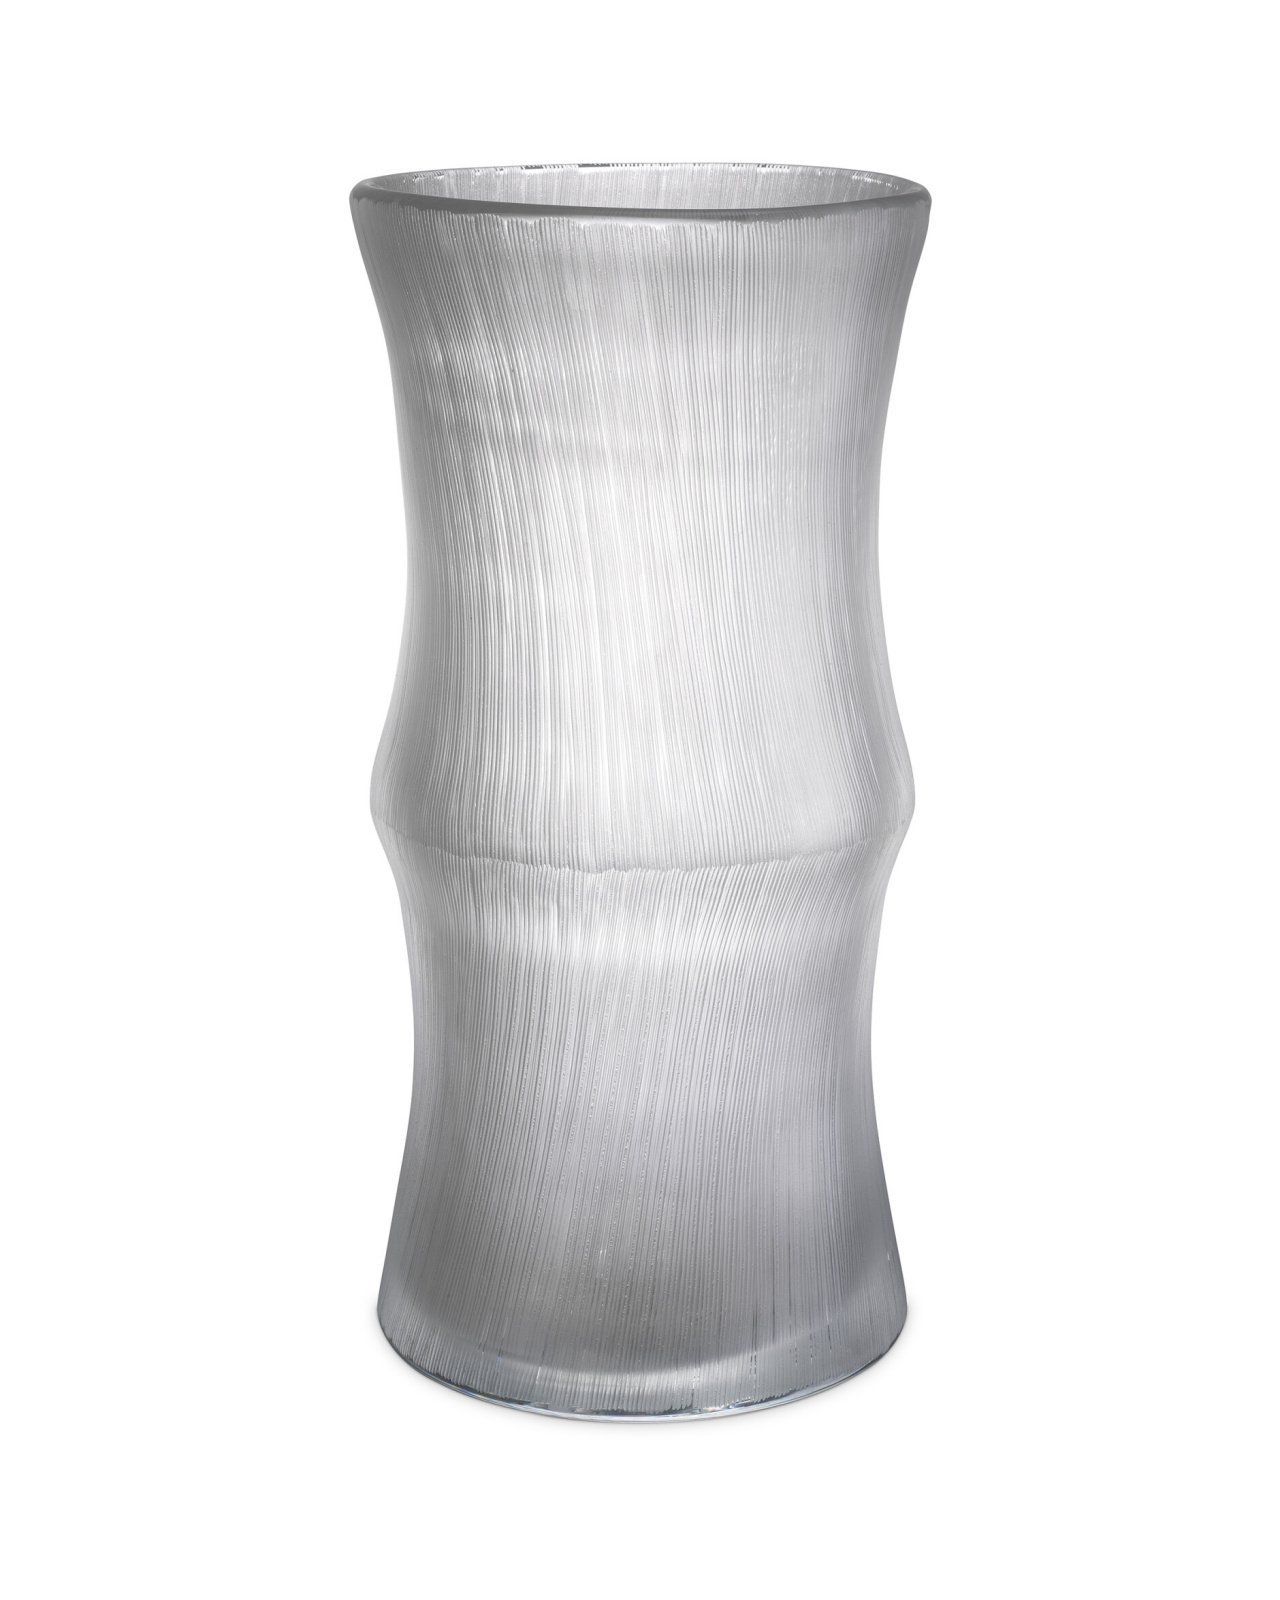 Vase Thiara